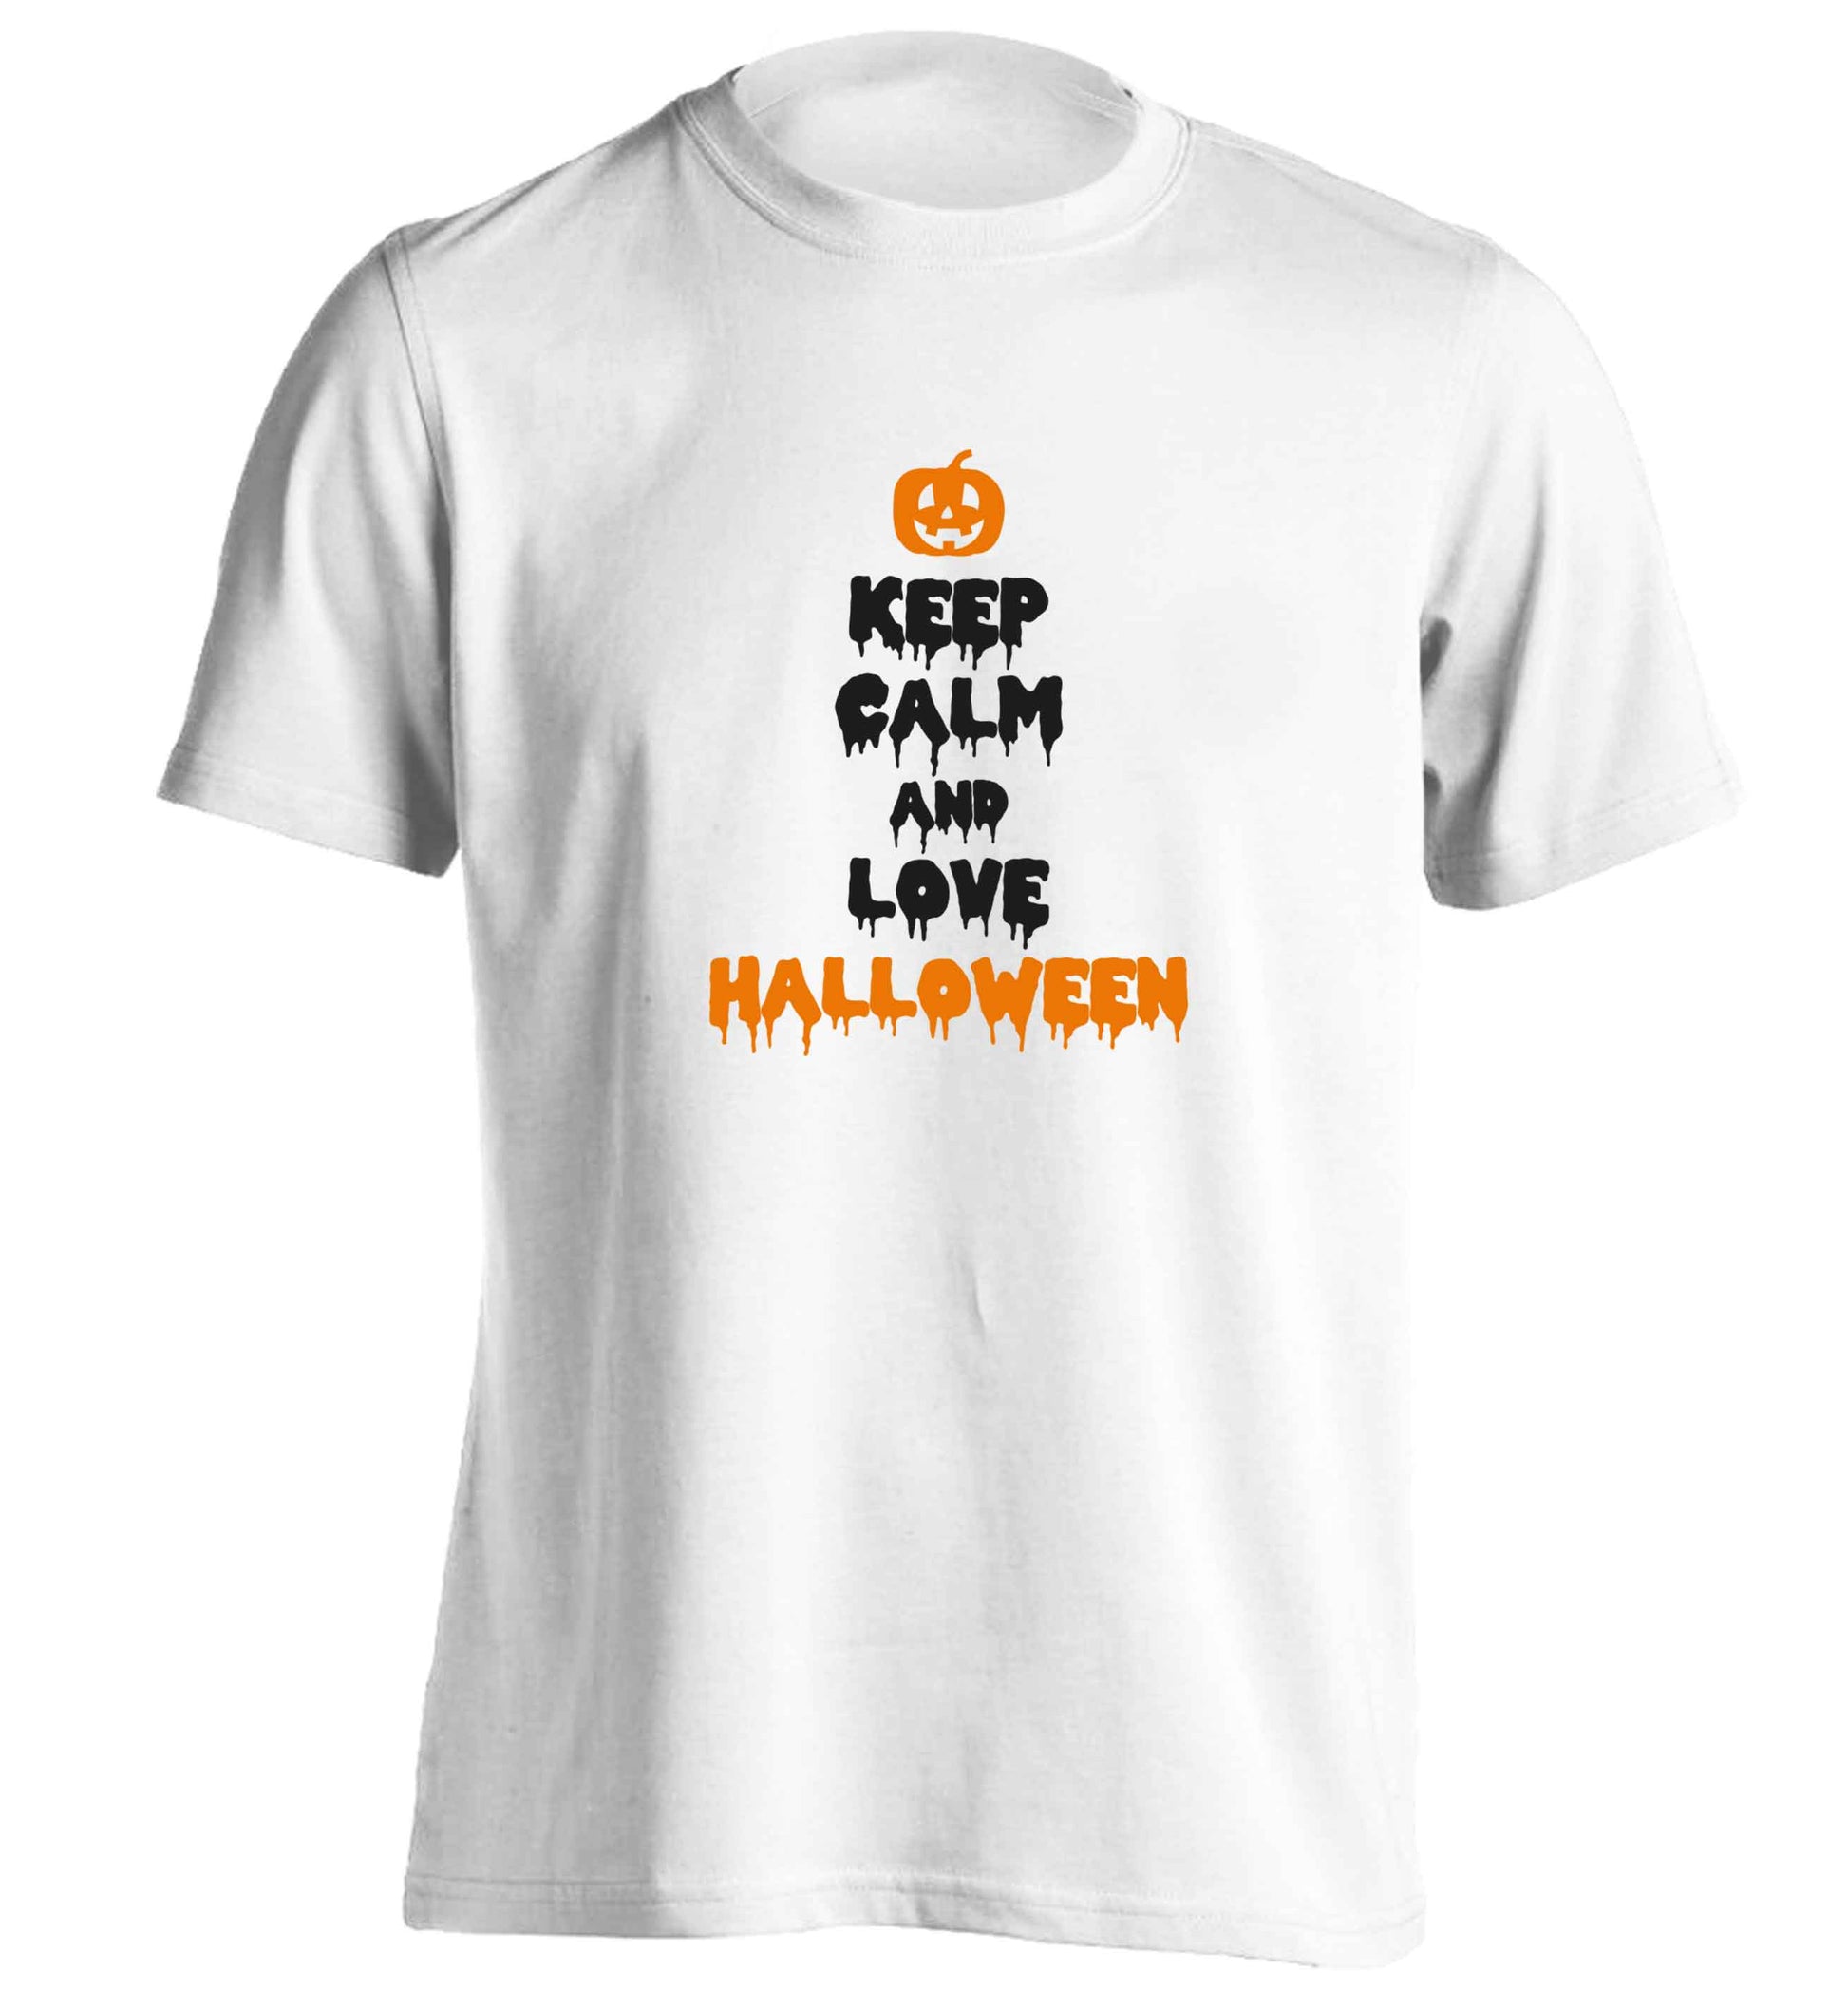 Keep calm and love halloween adults unisex white Tshirt 2XL